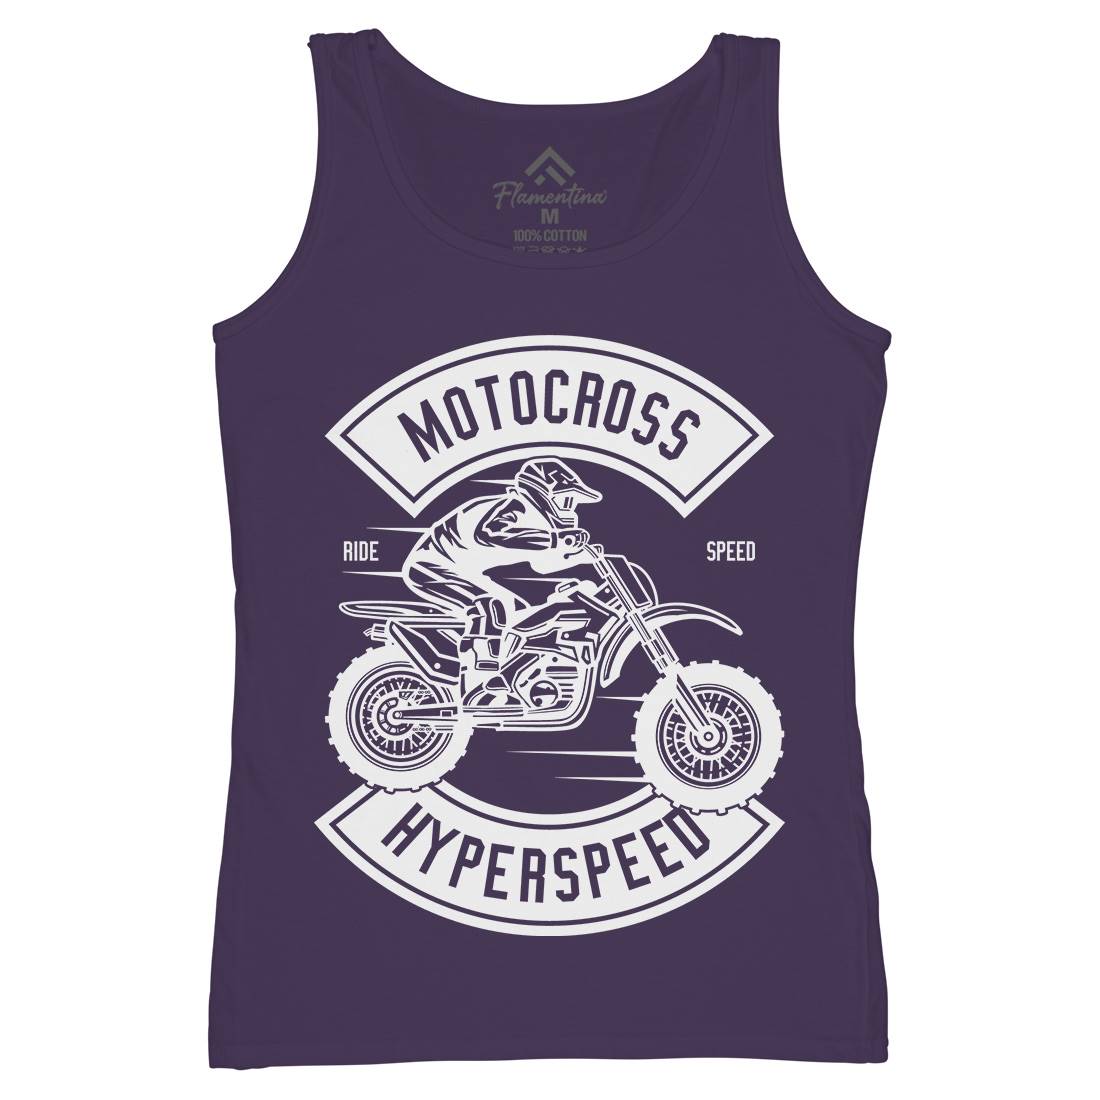 Motocross Hyperspeed Womens Organic Tank Top Vest Motorcycles B577